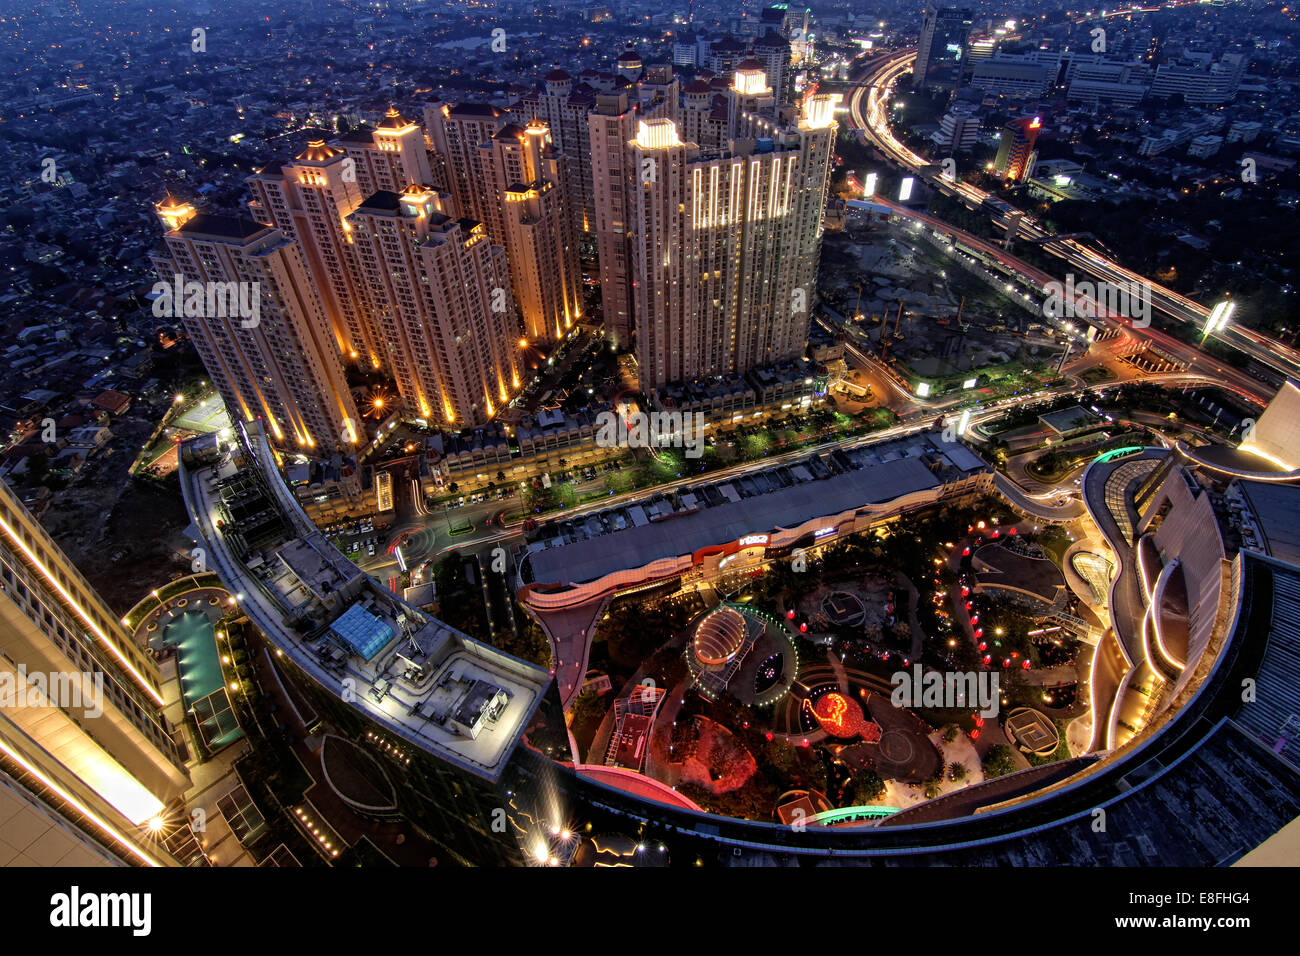 Indonesien, Jakarta spezielle Hauptstadtregion Daerah Khusus Ibukota Jakarta, Letjen S Parman Nacht Stadtbild von Alaina Turm (Central Park) gesehen Stockfoto